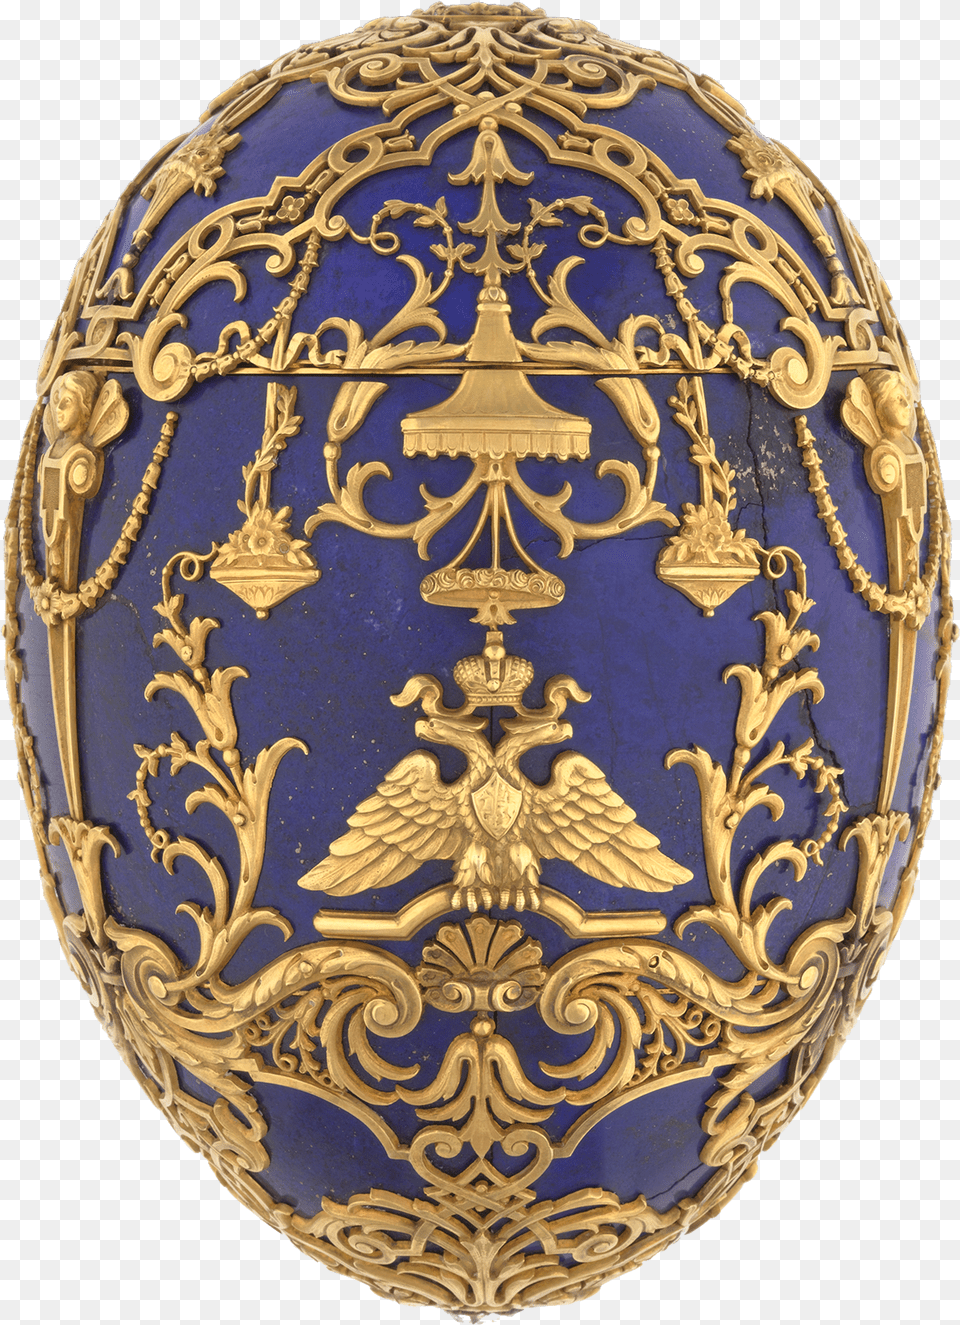 Tsesarevich Egg 1912 Peter Carl Faberg Faberge Egg, Art, Pottery, Porcelain, Gold Free Transparent Png